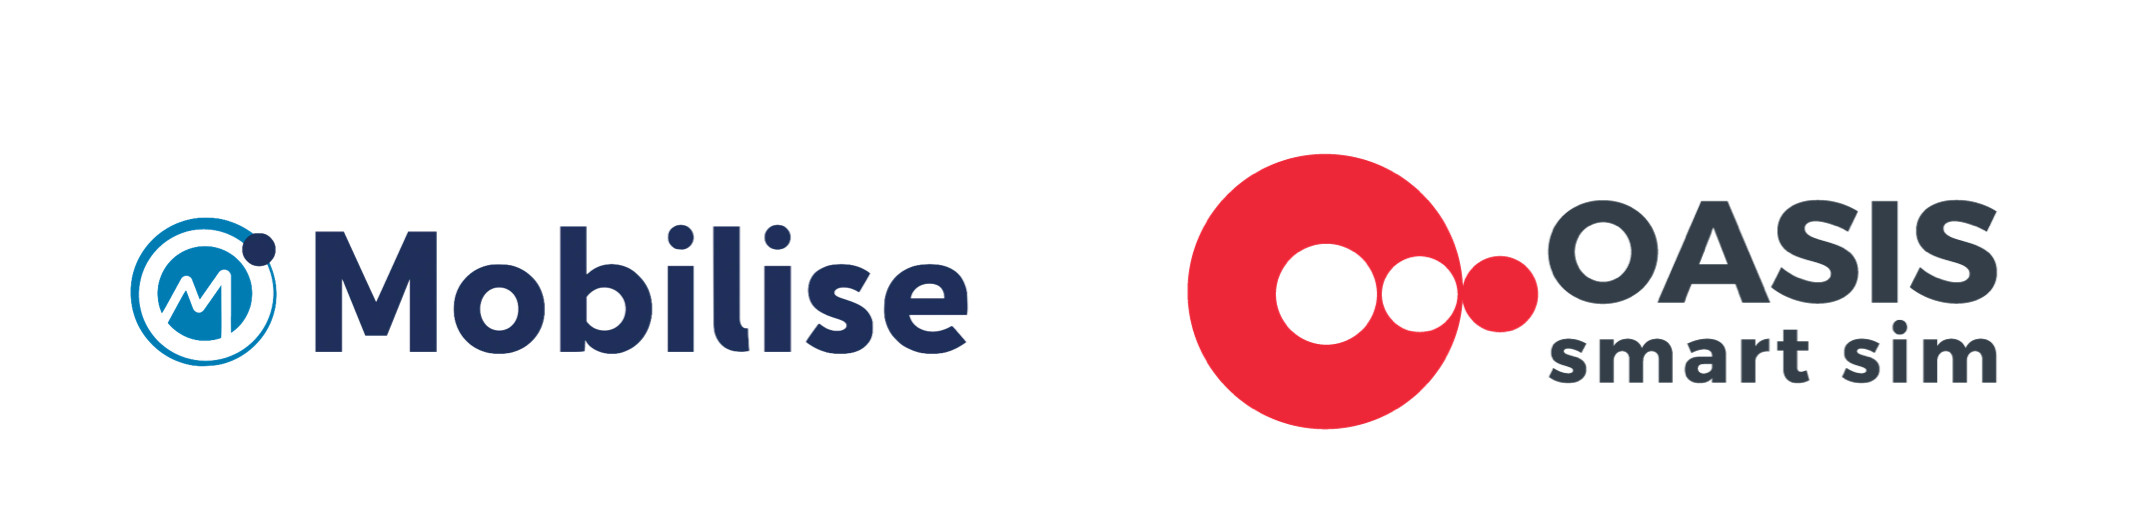 Mobilise and Oasis Smart SIM logos